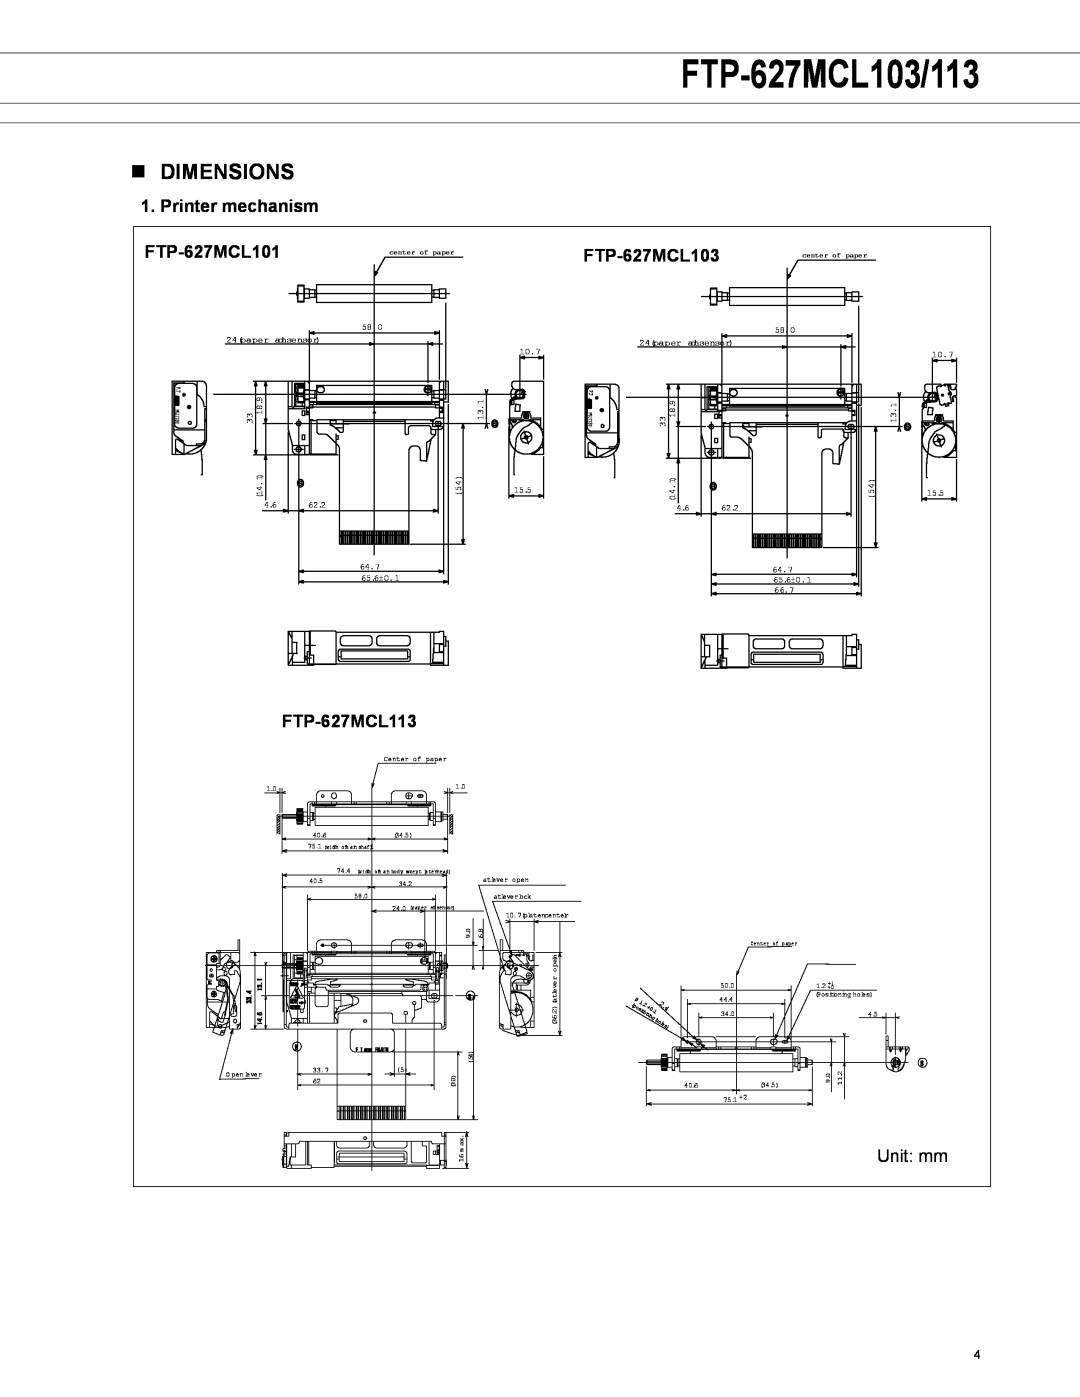 Fujitsu manual n dimensions, Printer mechanism, FTP-627MCL101, FTP-627MCL113, FTP-627MCL103/113 